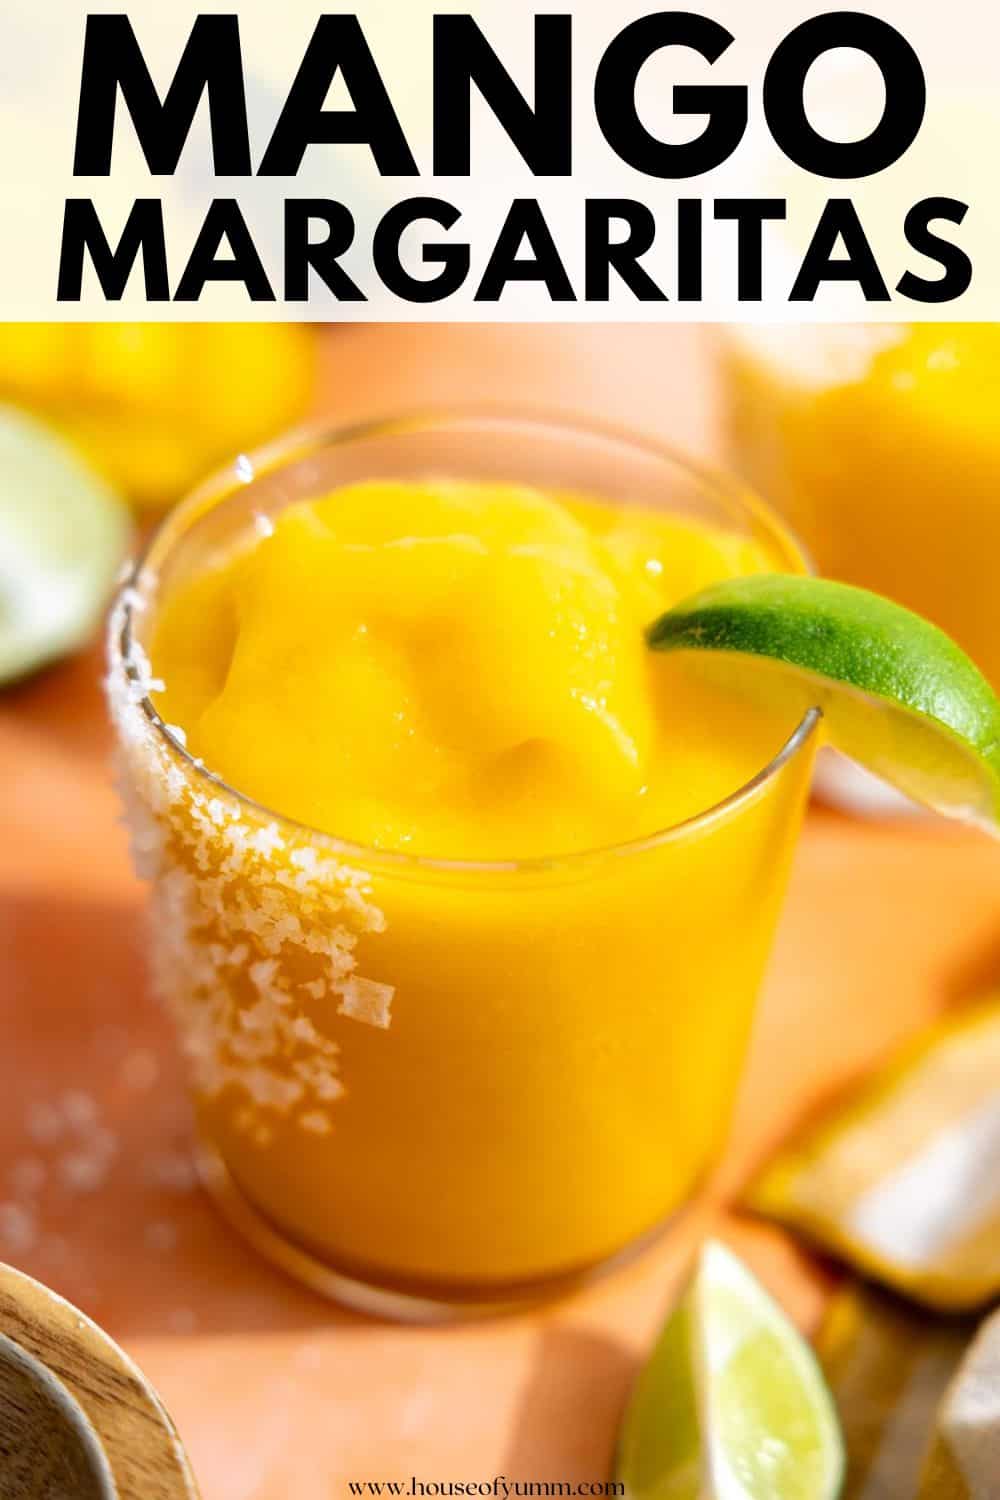 Mango margaritas with text.